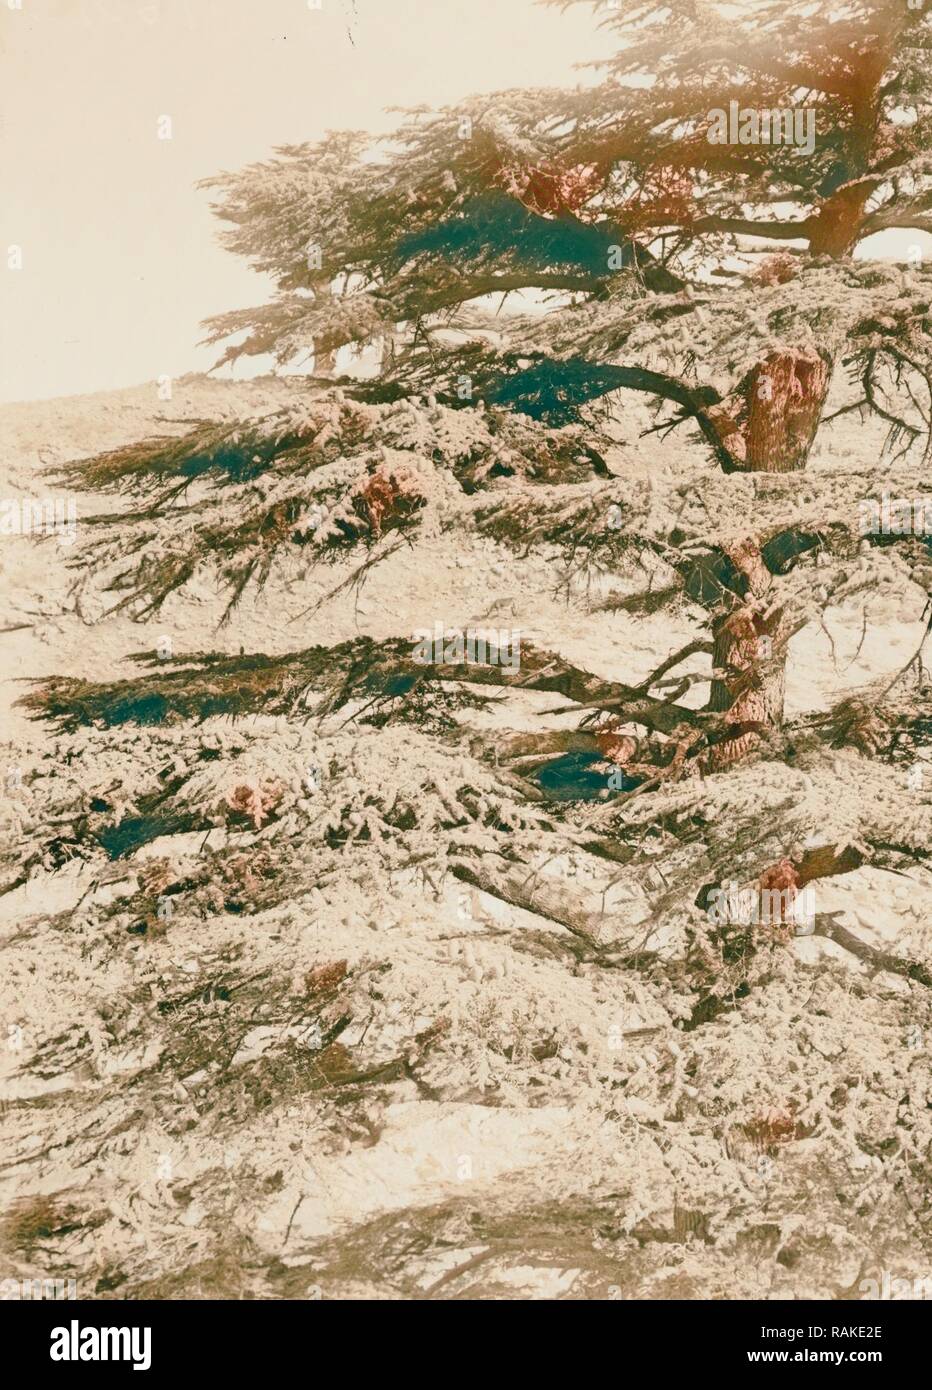 The cedars of Lebanon, Cedrus Libani Barr. Cedar branches with cones 1900, Lebanon. Reimagined by Gibon. Classic art reimagined Stock Photo